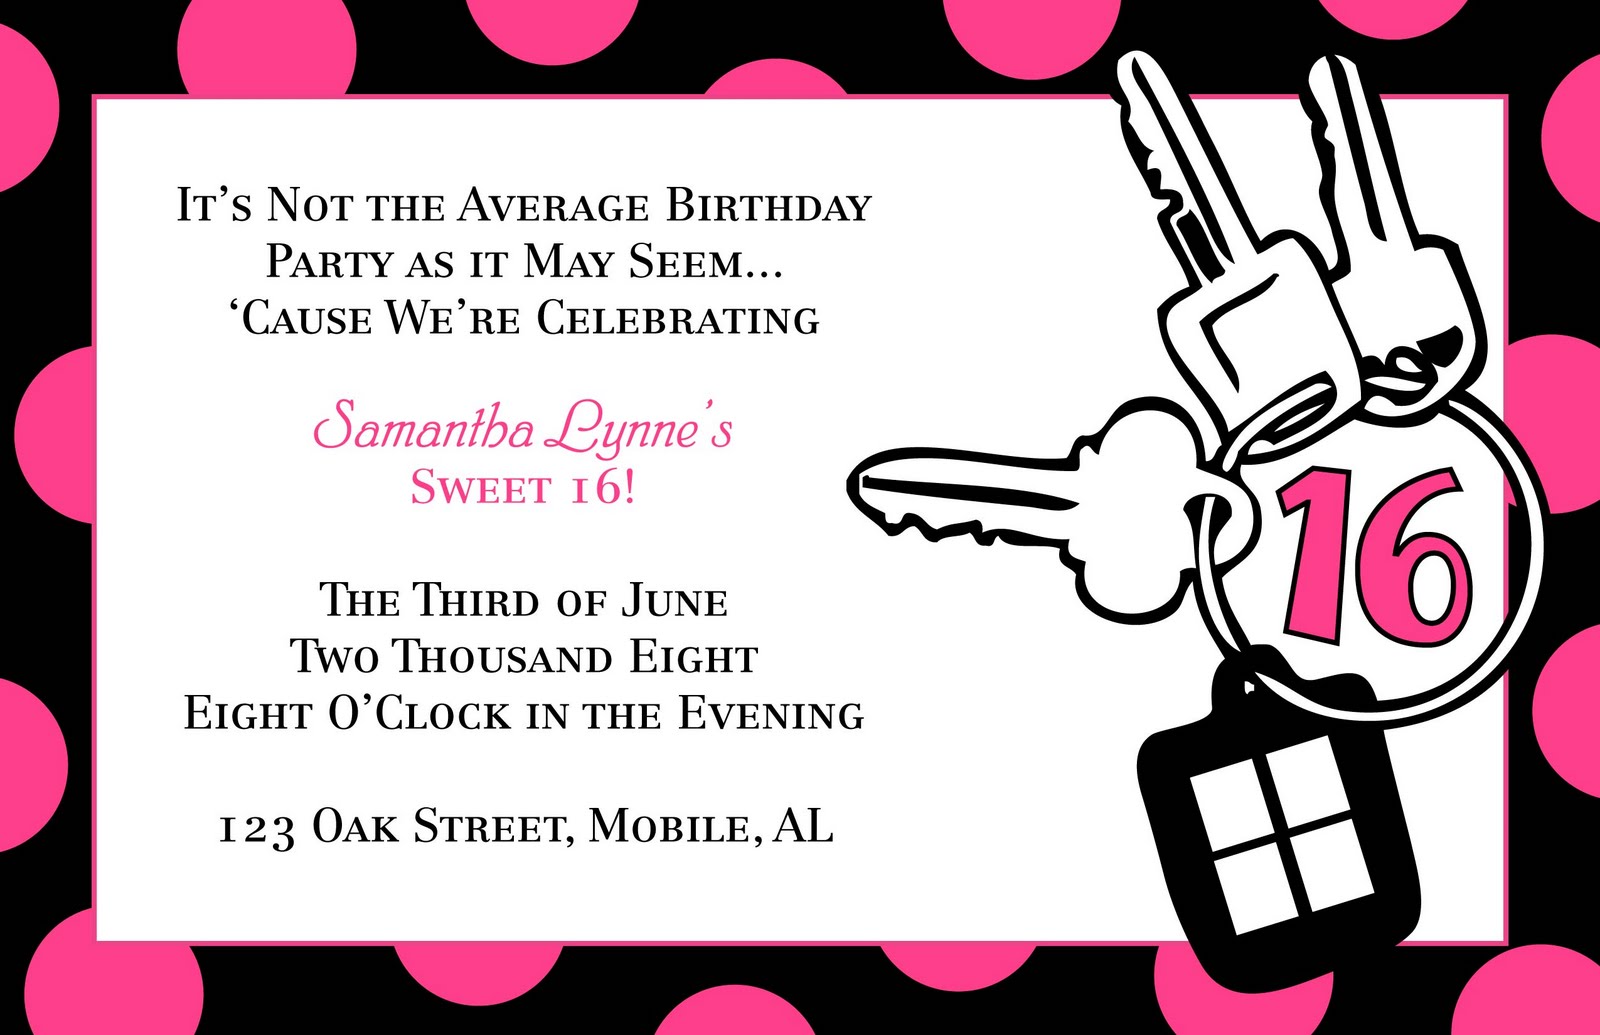 Sweet 16 Birthday Invitations Templates Free